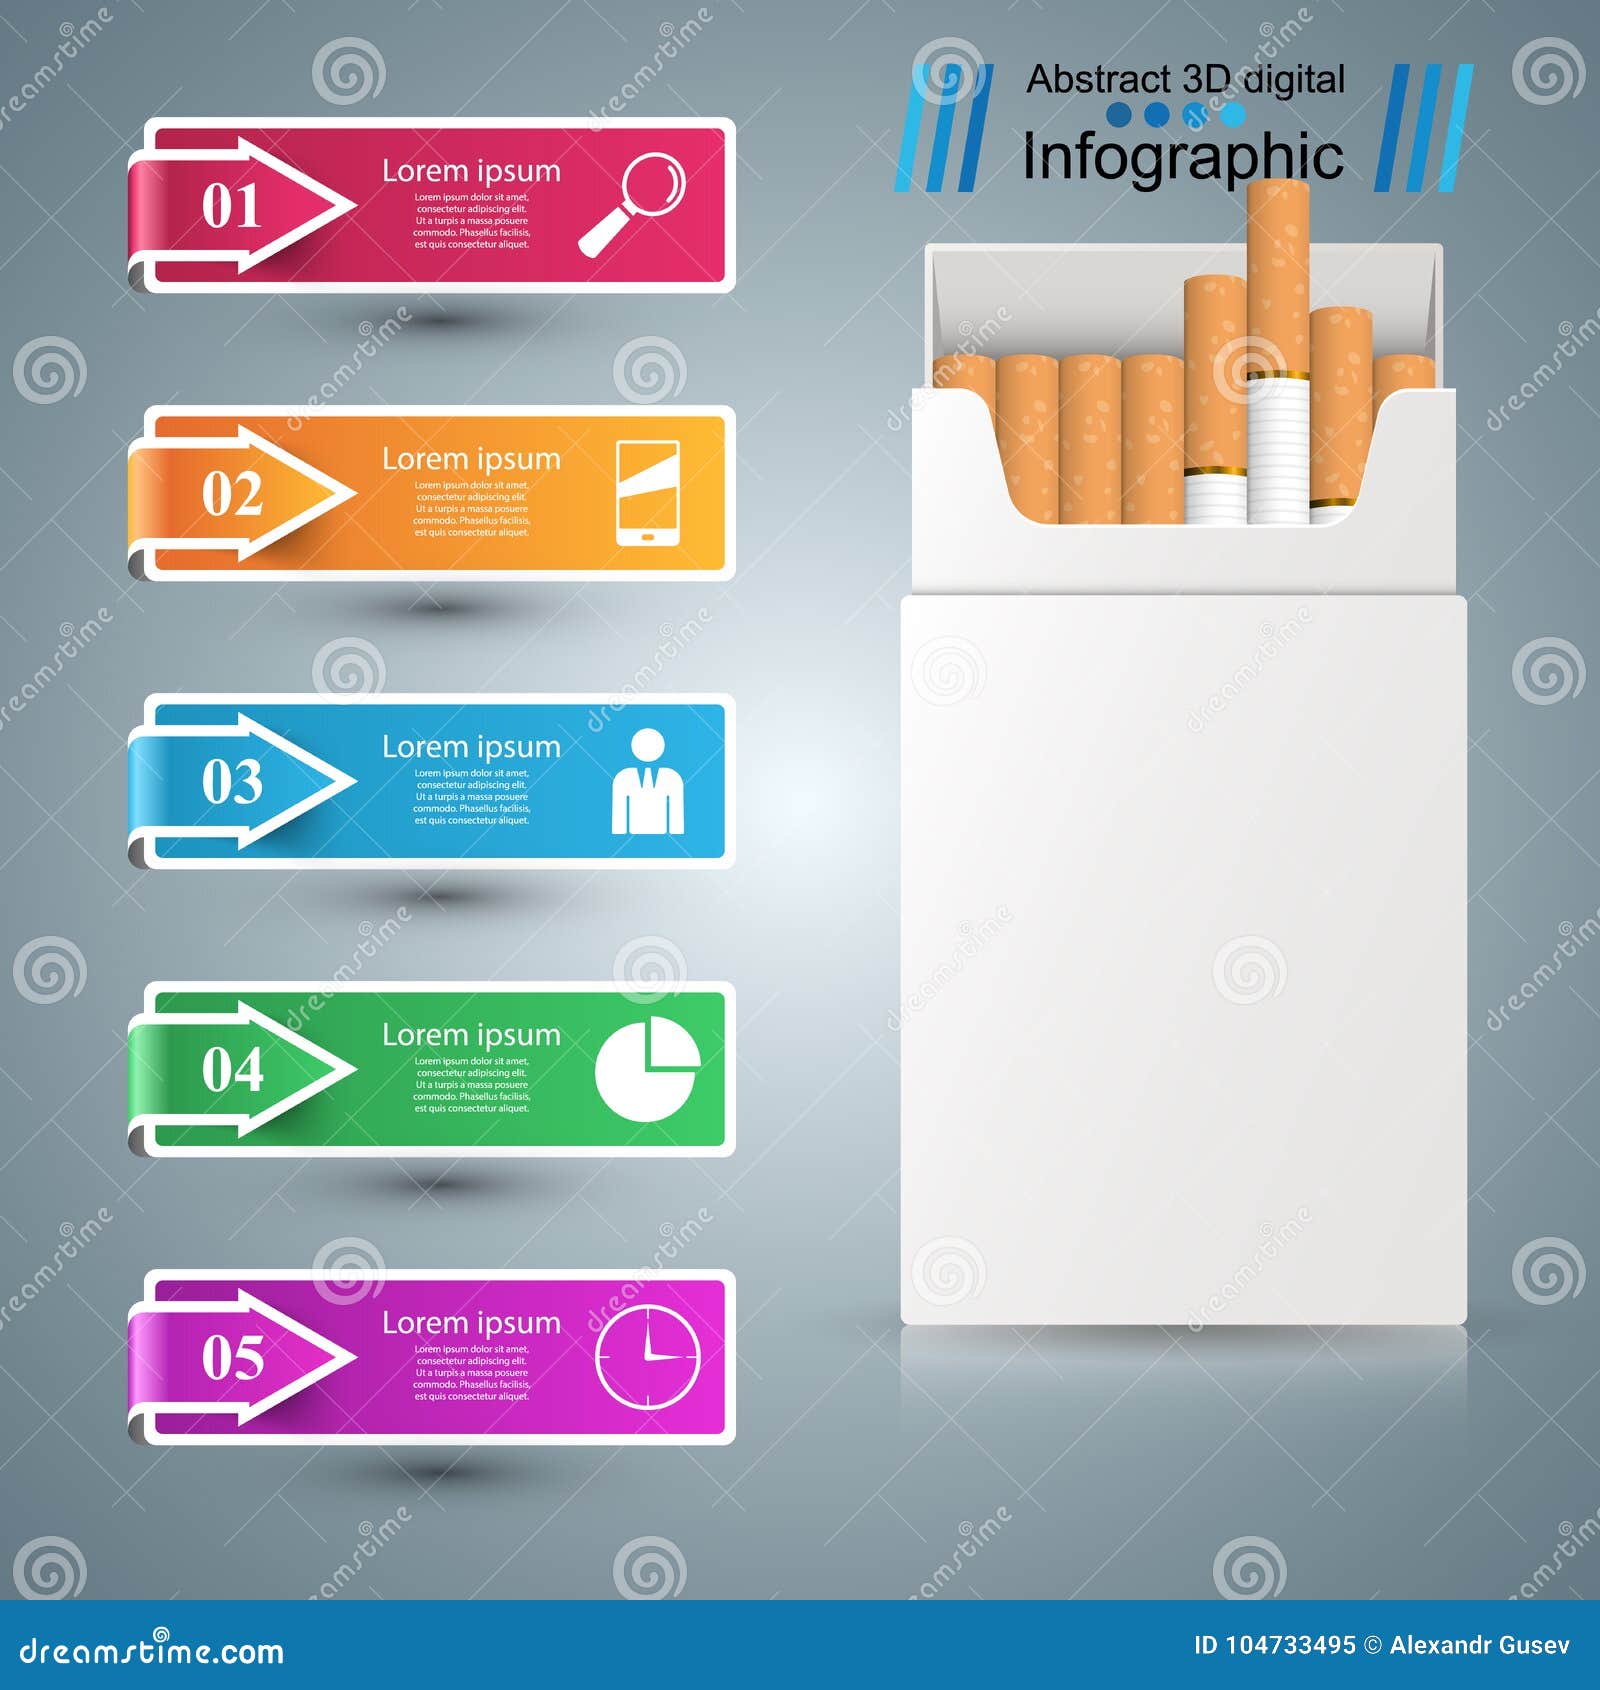 cigarette, vaper, smoke - business infographic.